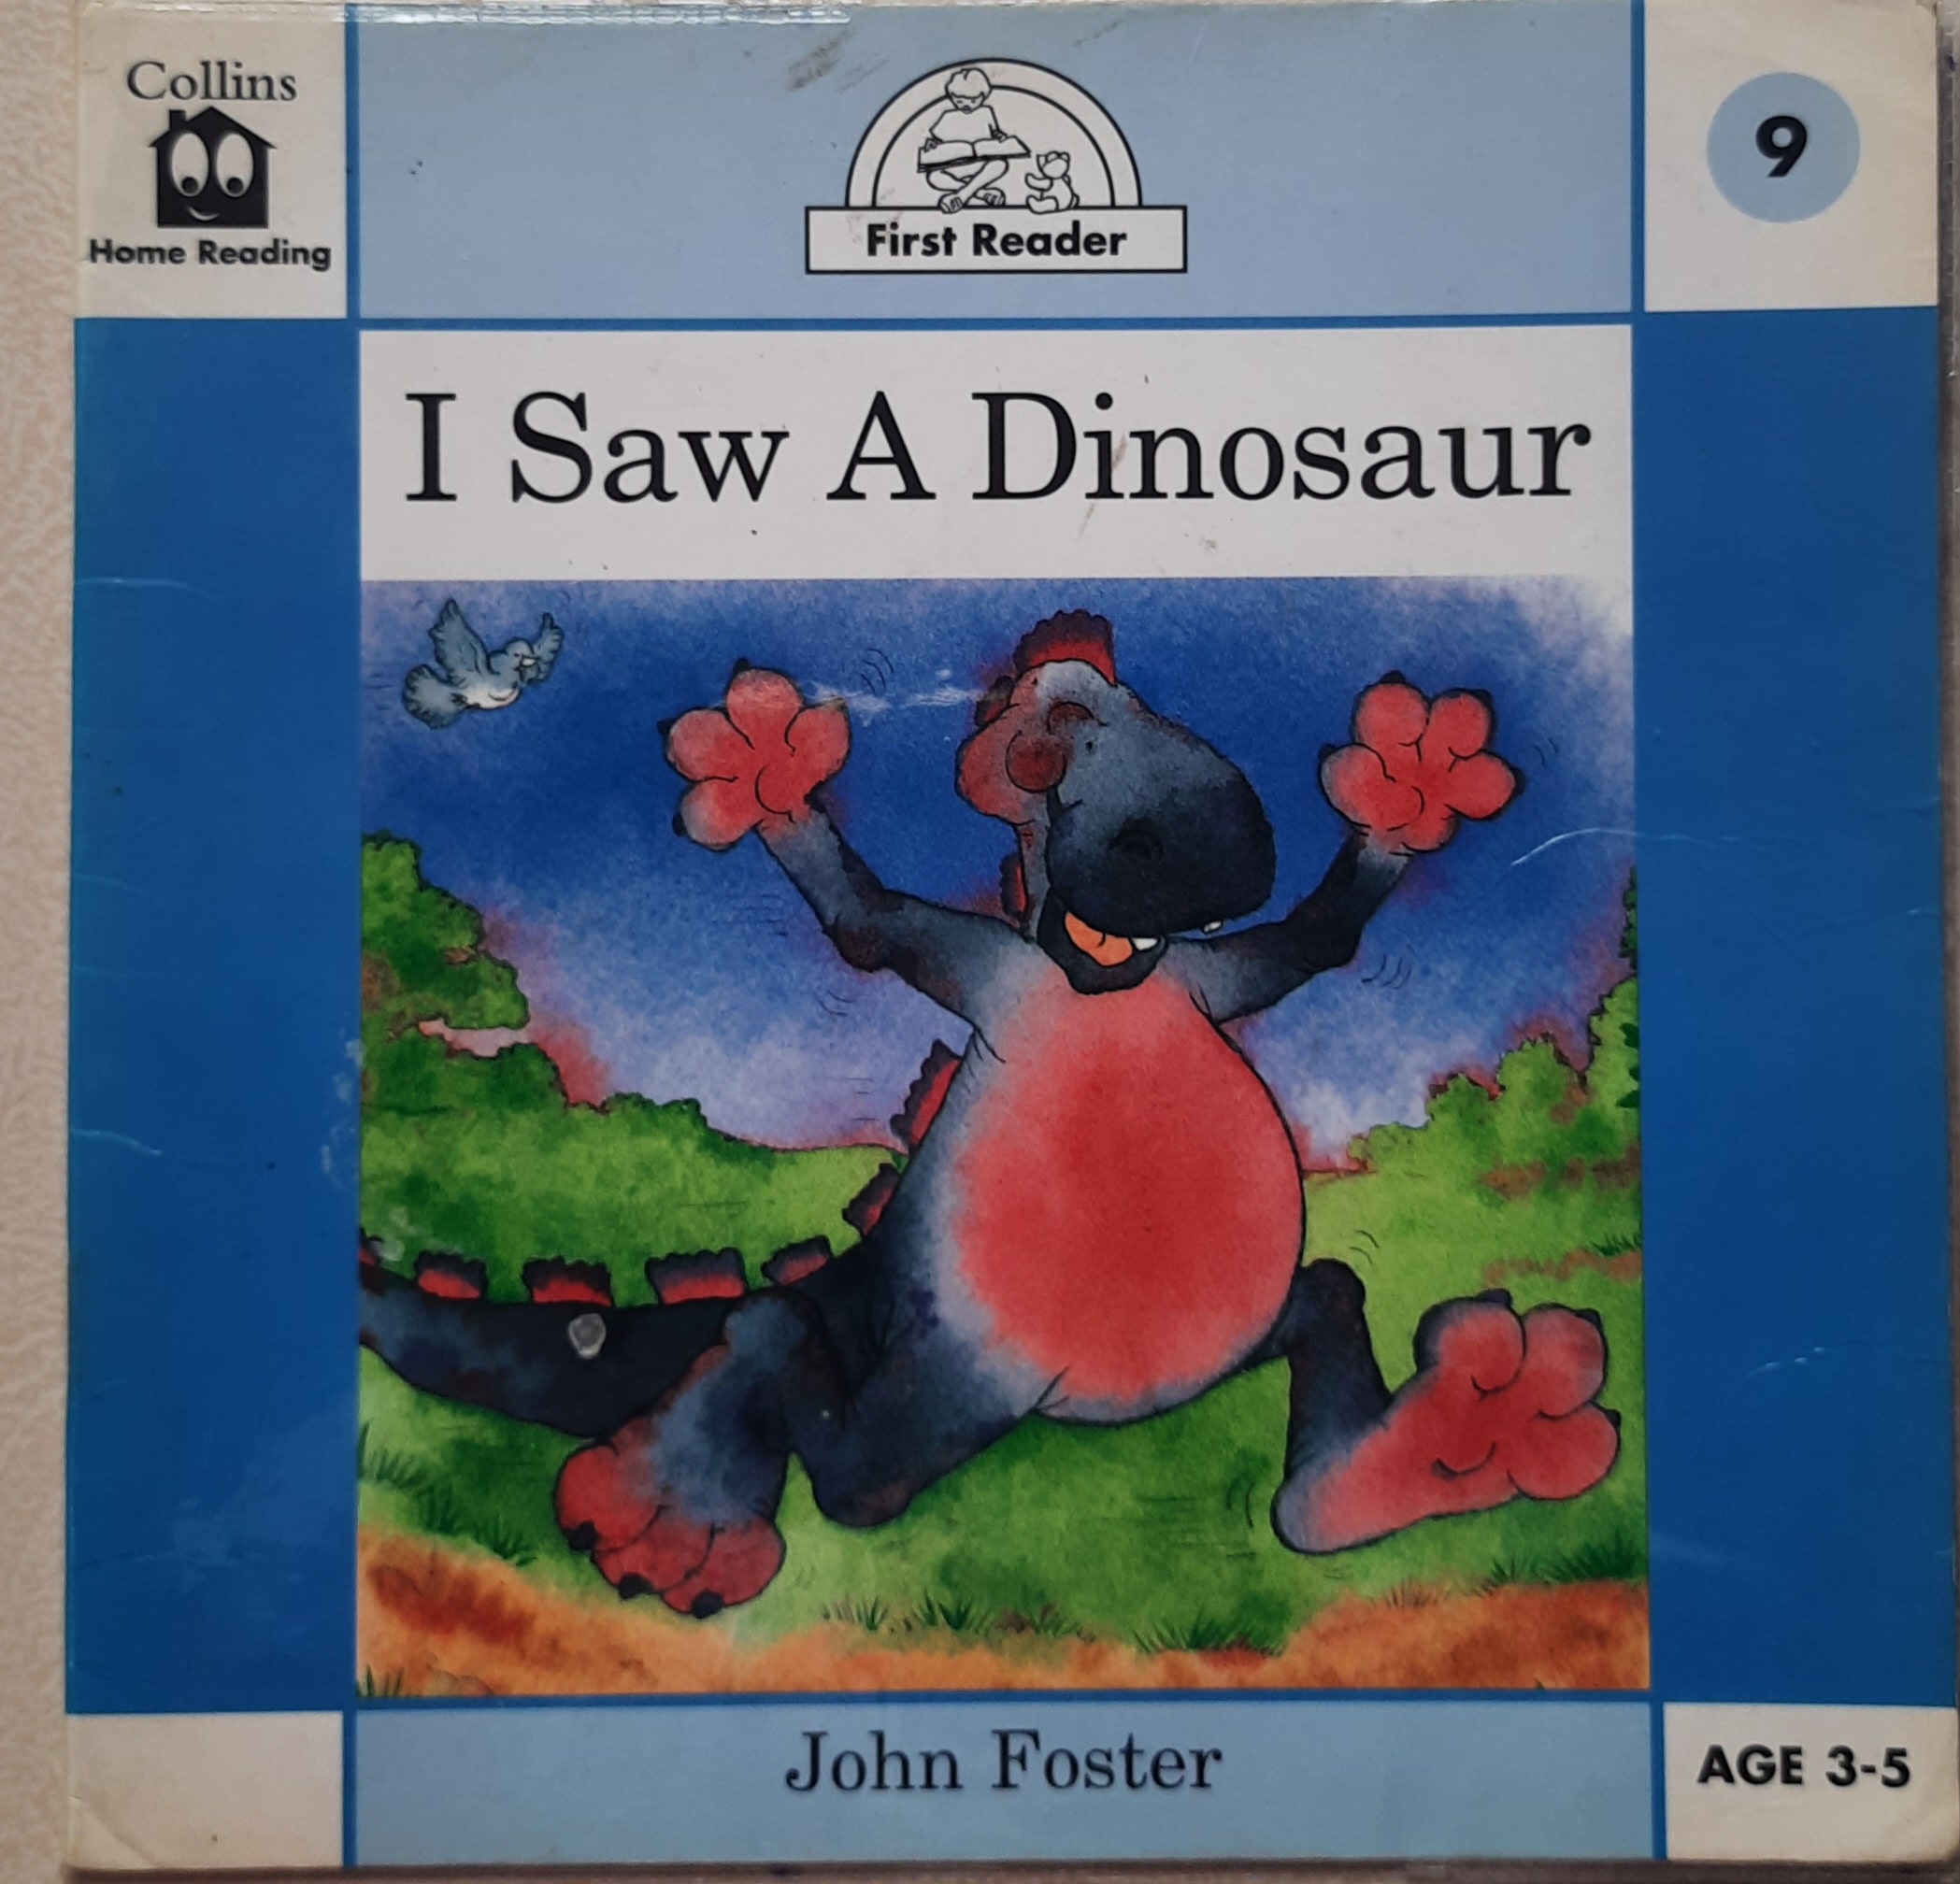 IMG : I Saw a Dinosaur